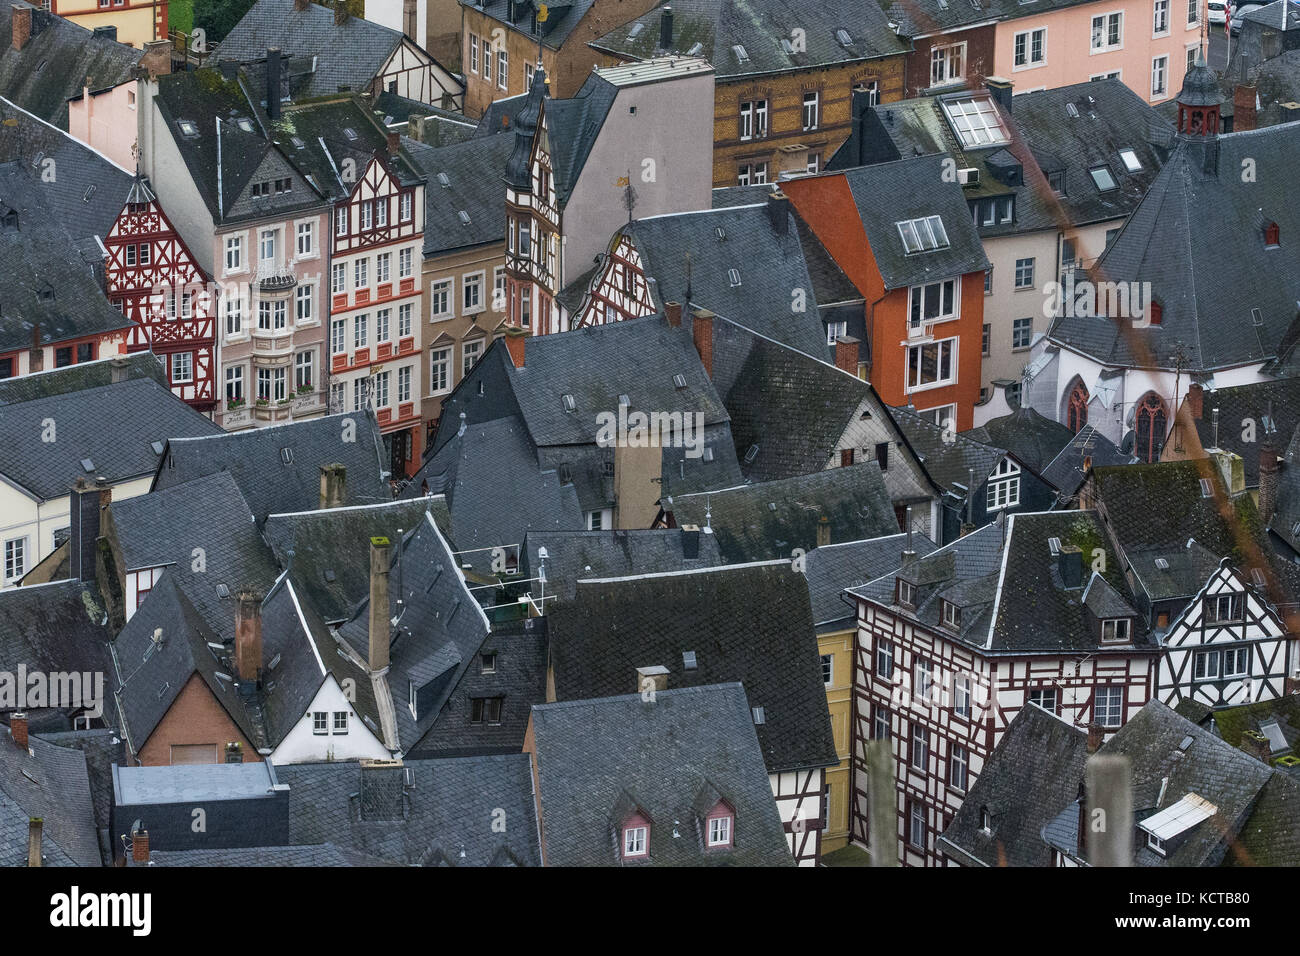 Das historische Zentrum, Bernkastel-Kues, Mosel, Deutschland Stockfoto